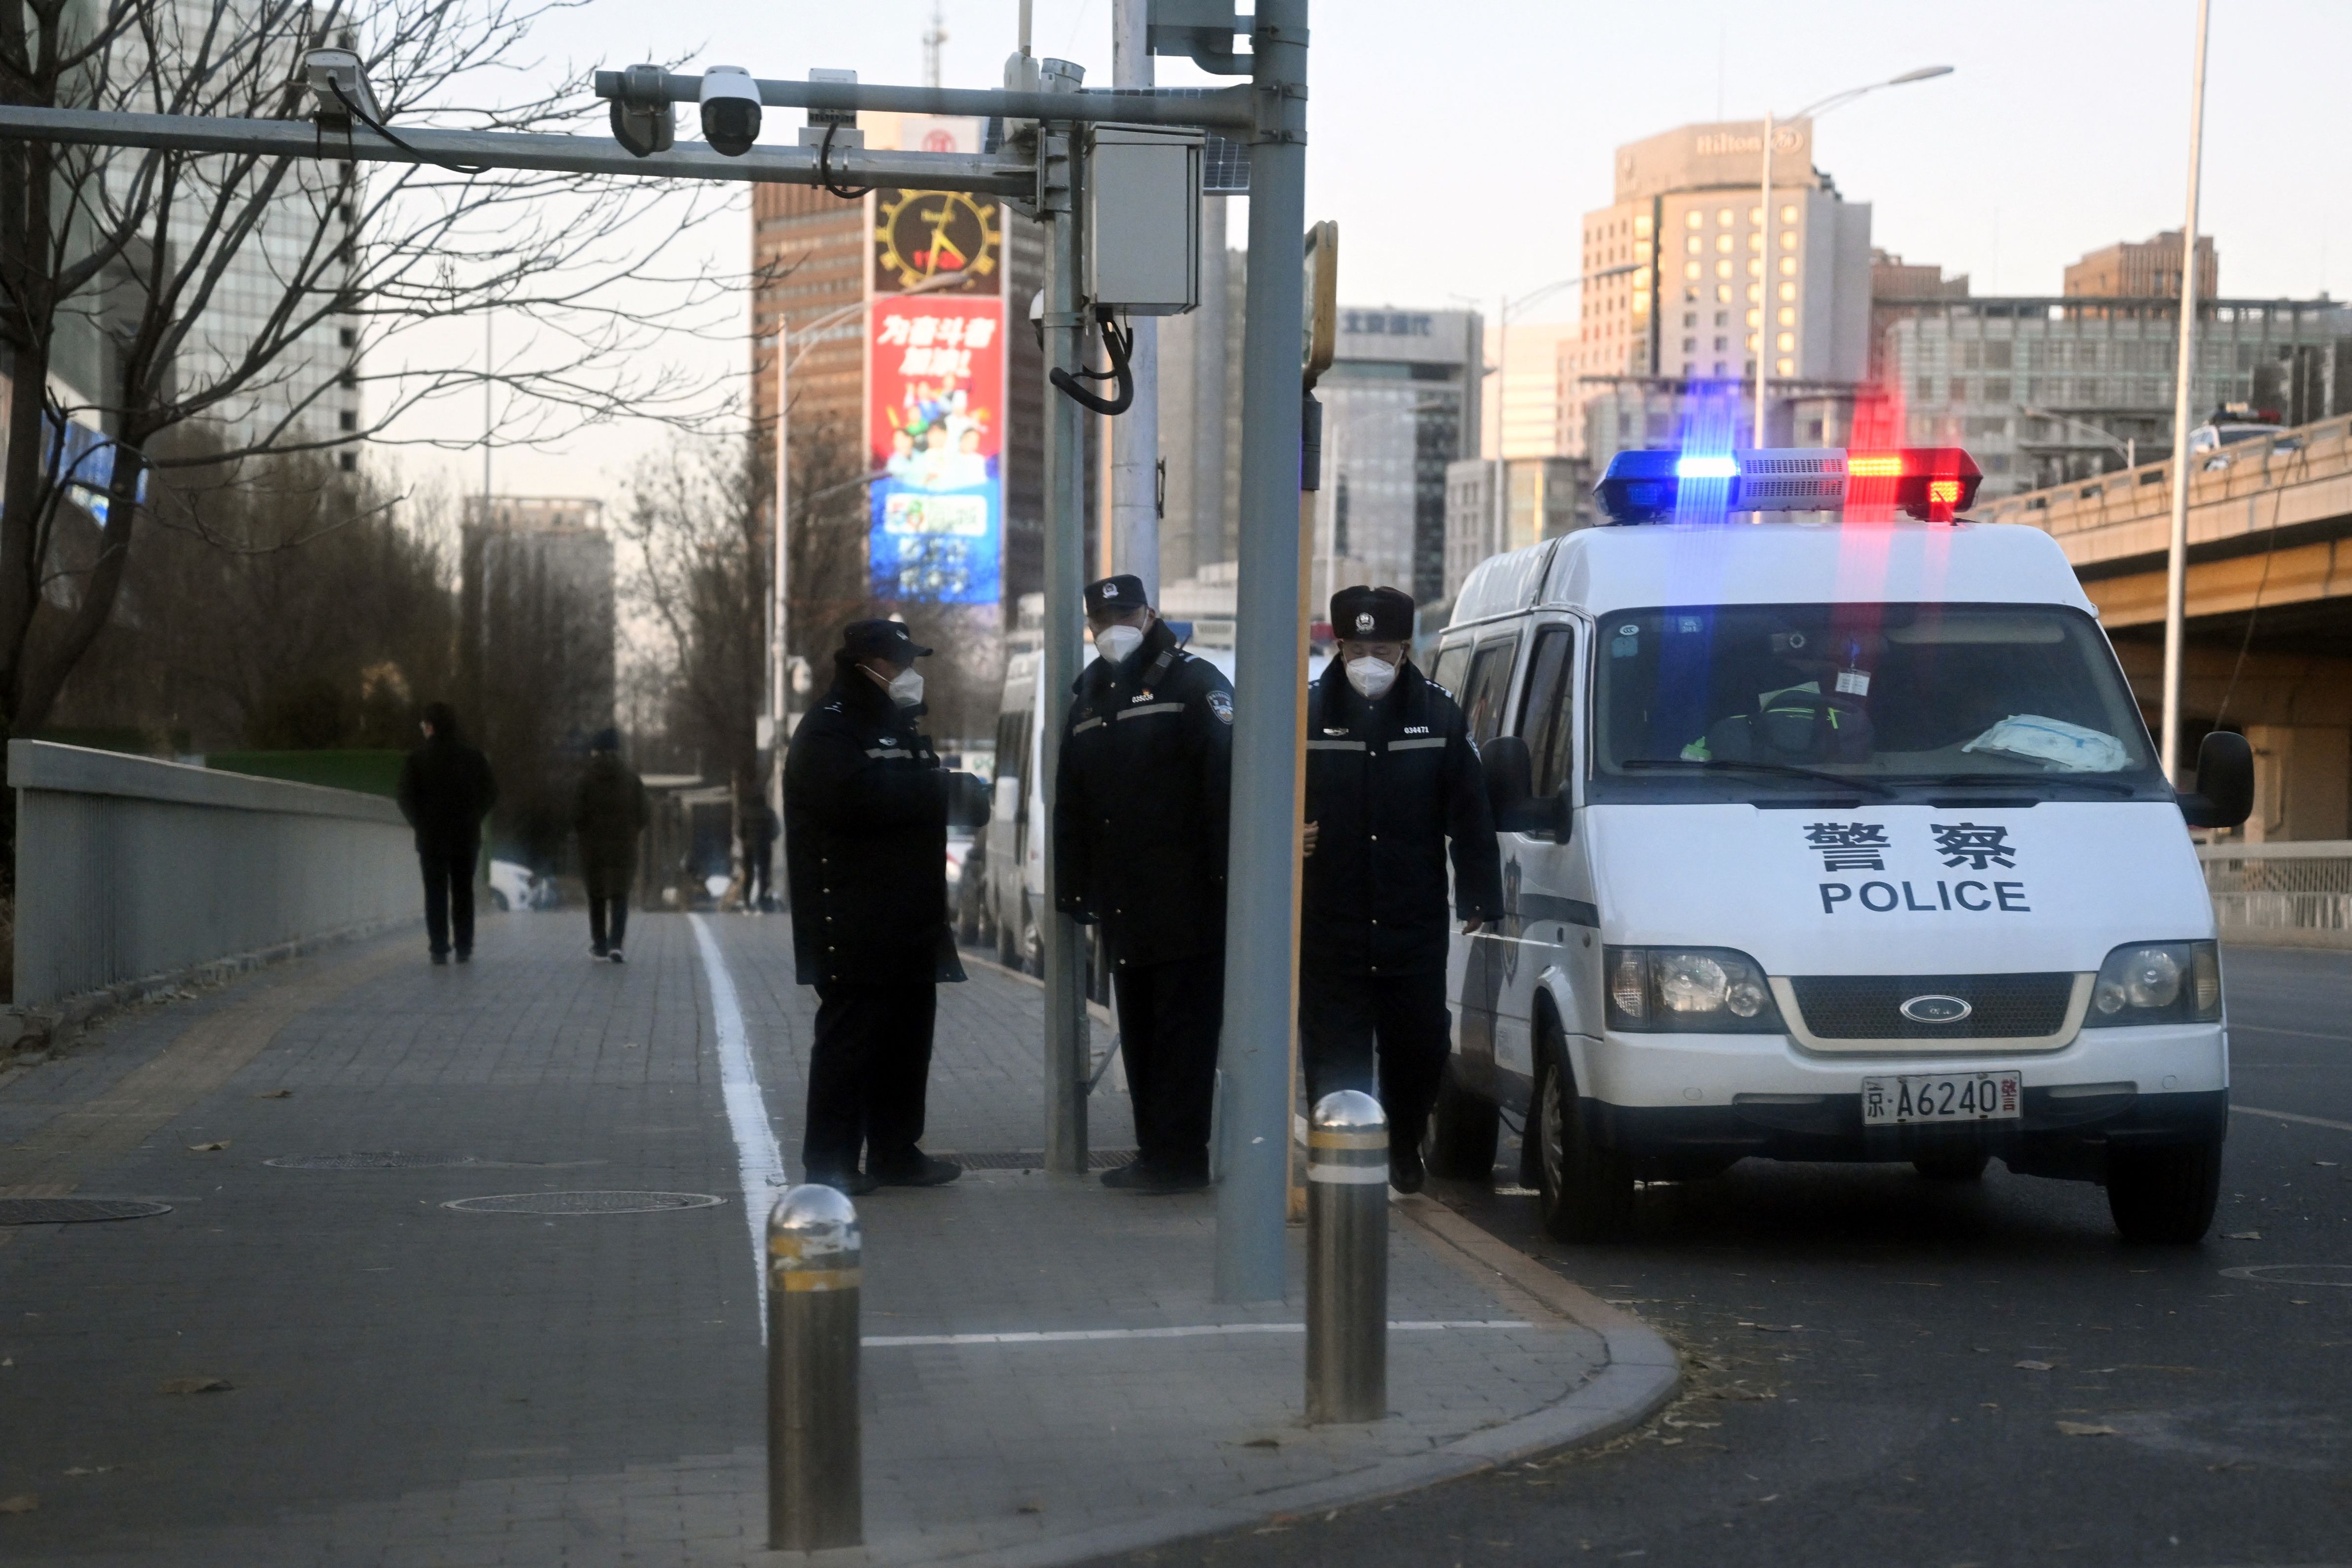 Police in China